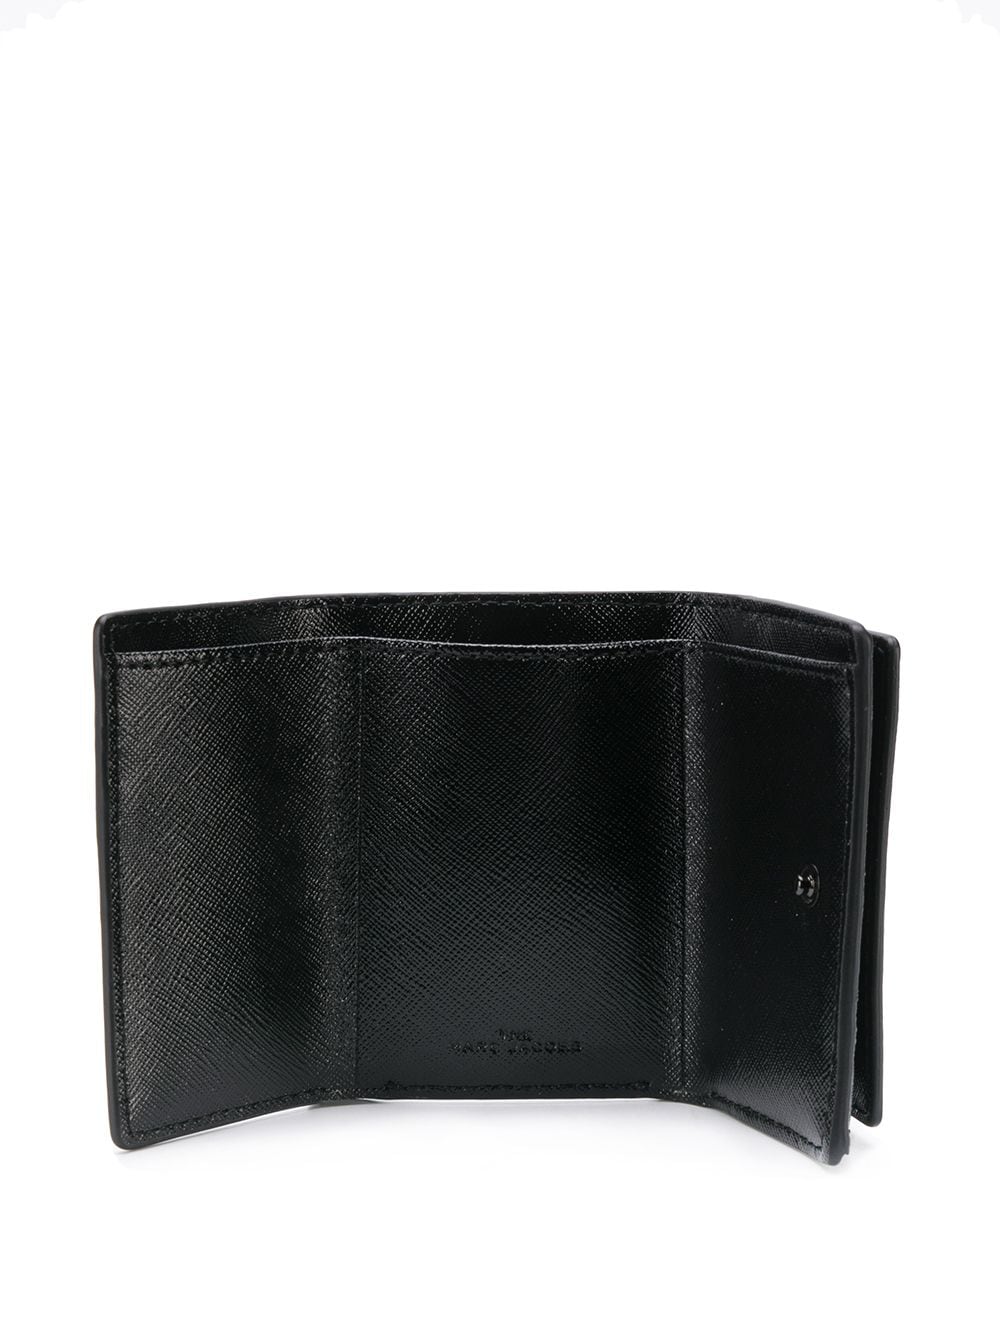 marc jacobs mini snapshot trifold wallet - black